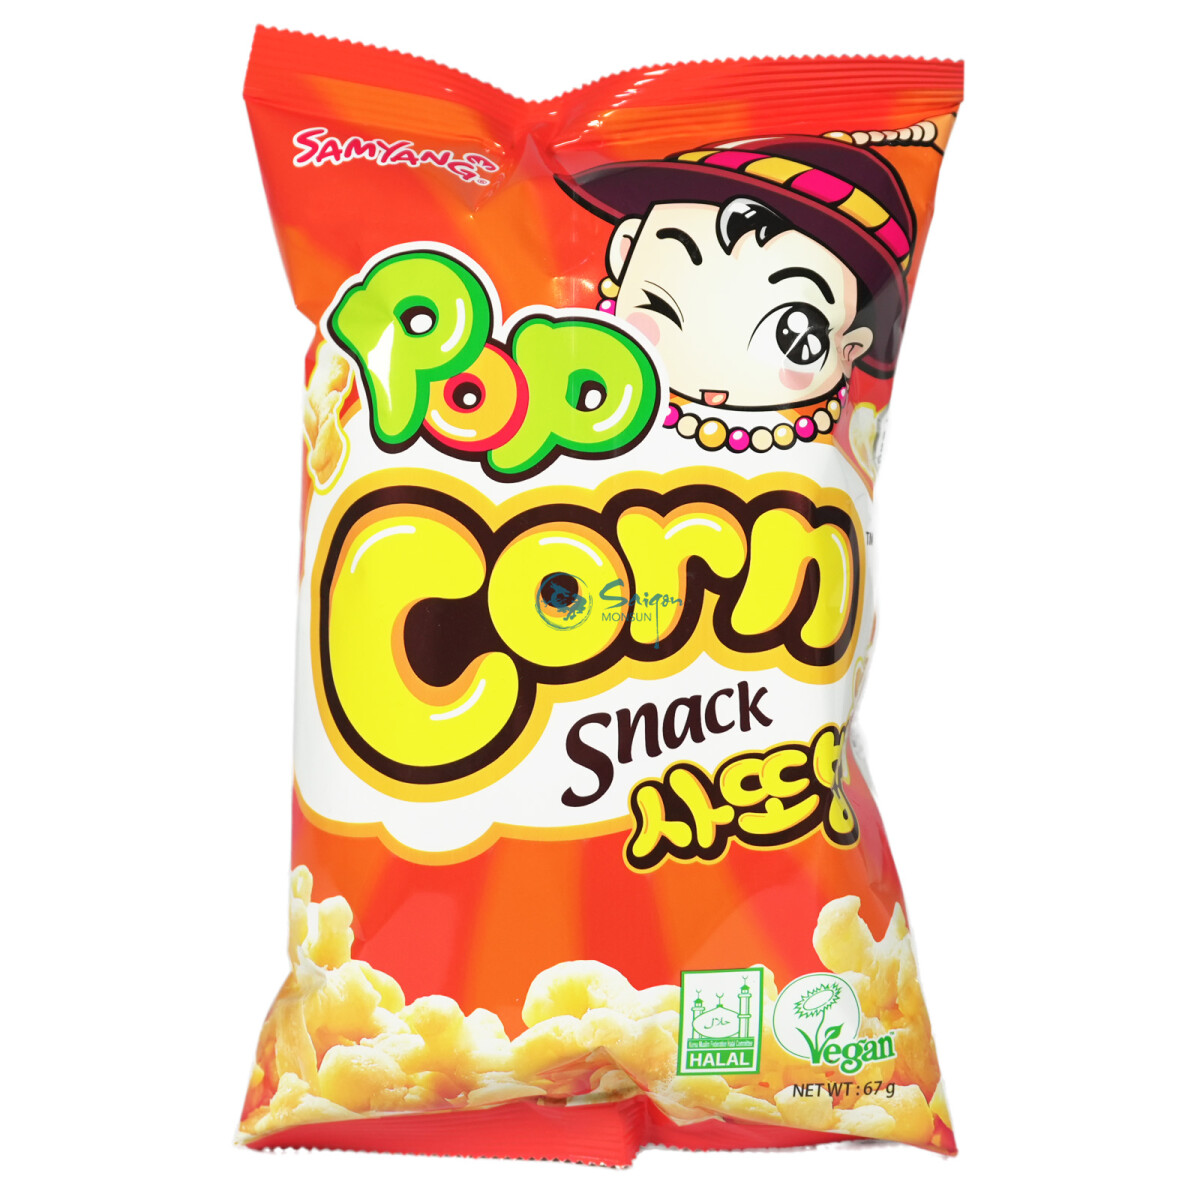 Samyang Saddobab Pop Corn Snack 67g